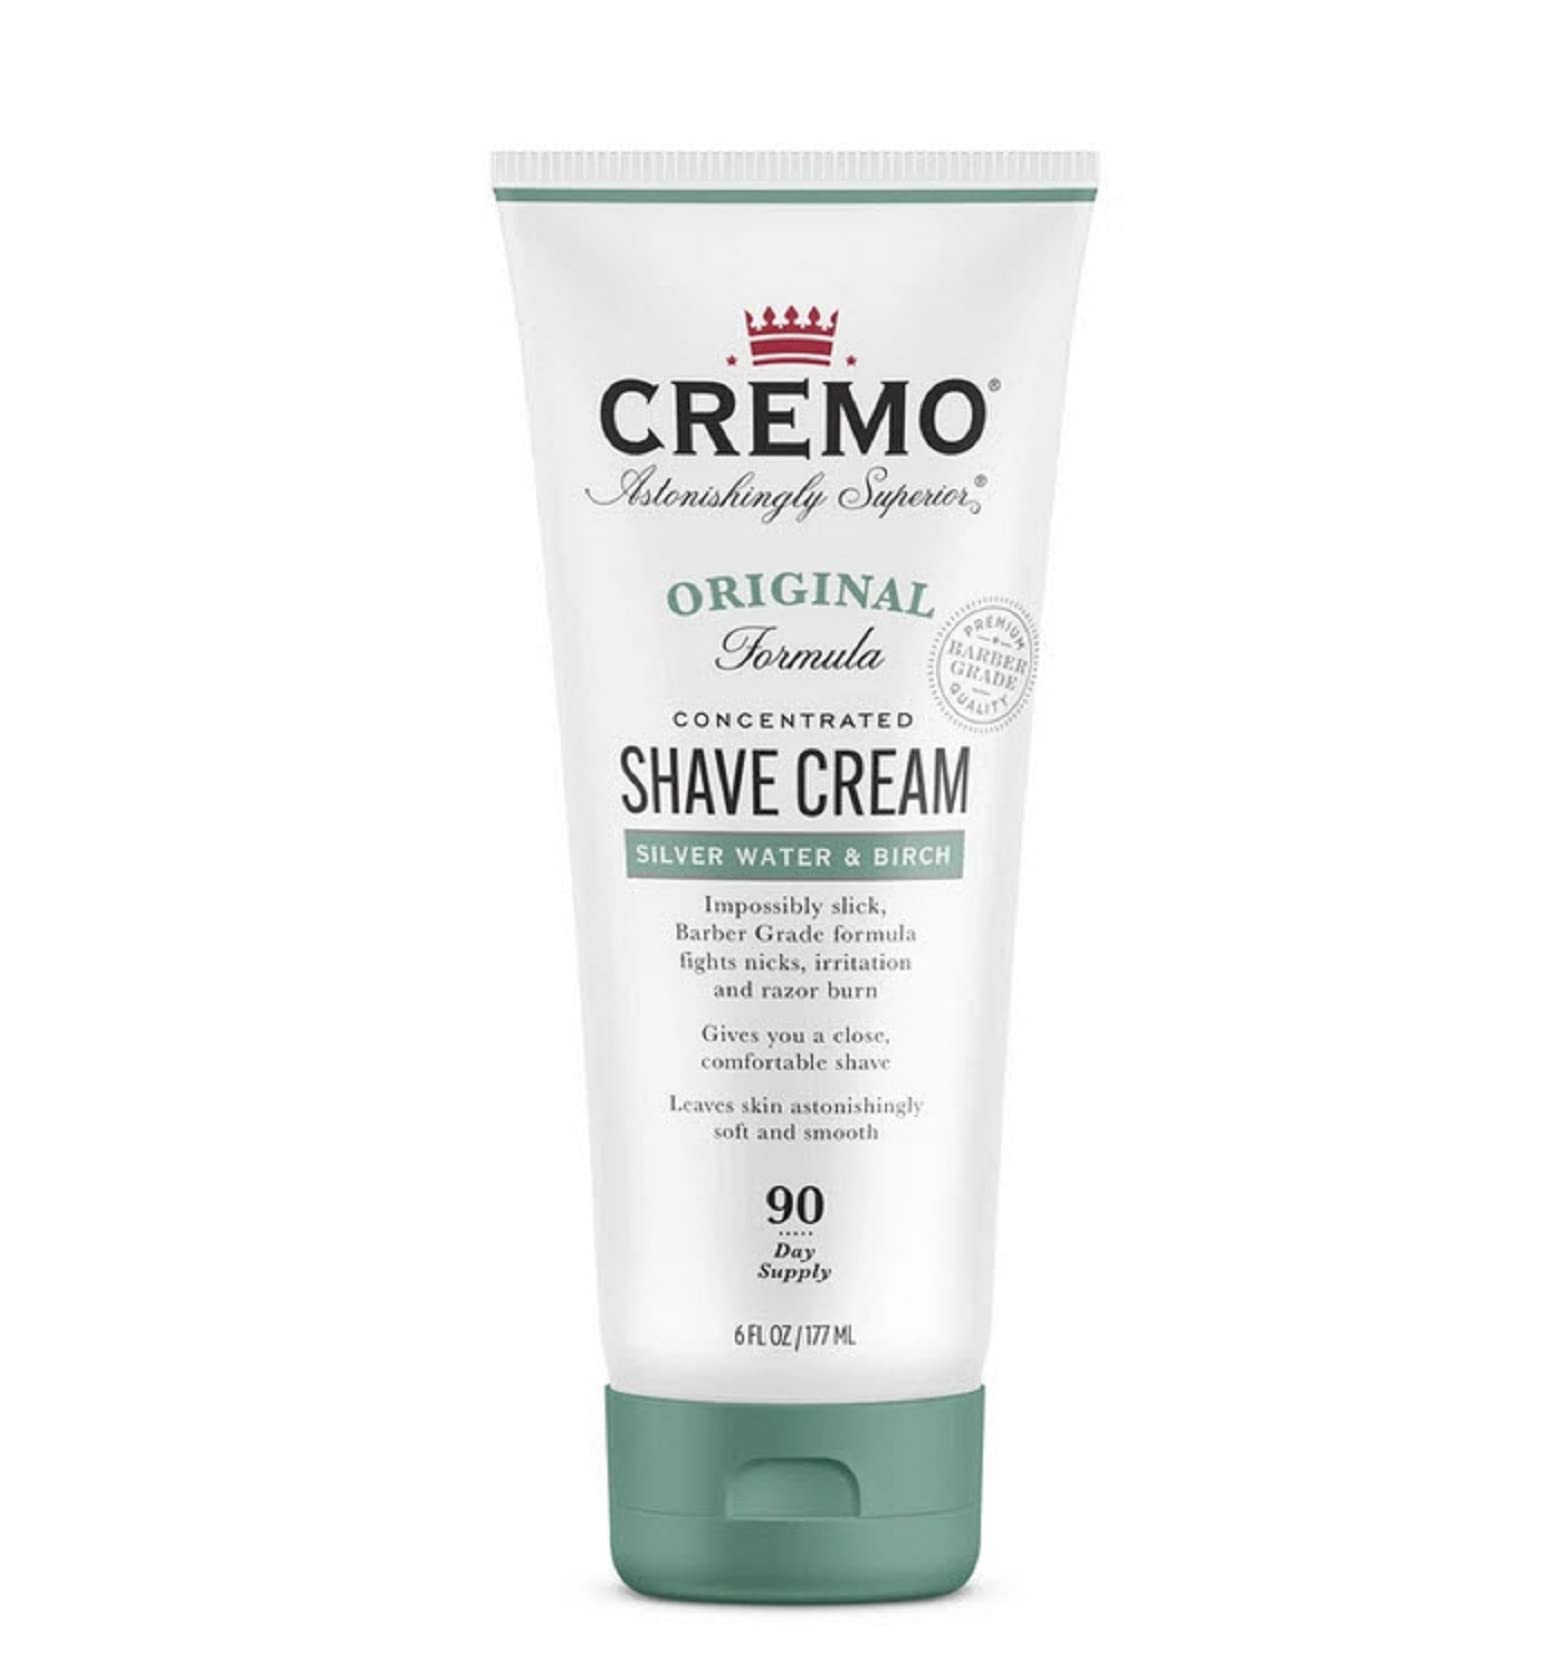 6-Oz Cremo Barber Grade Silver Water & Birch Shave Cream $3.59 w/ S&S + Free Shipping w/ Prime or on $35+